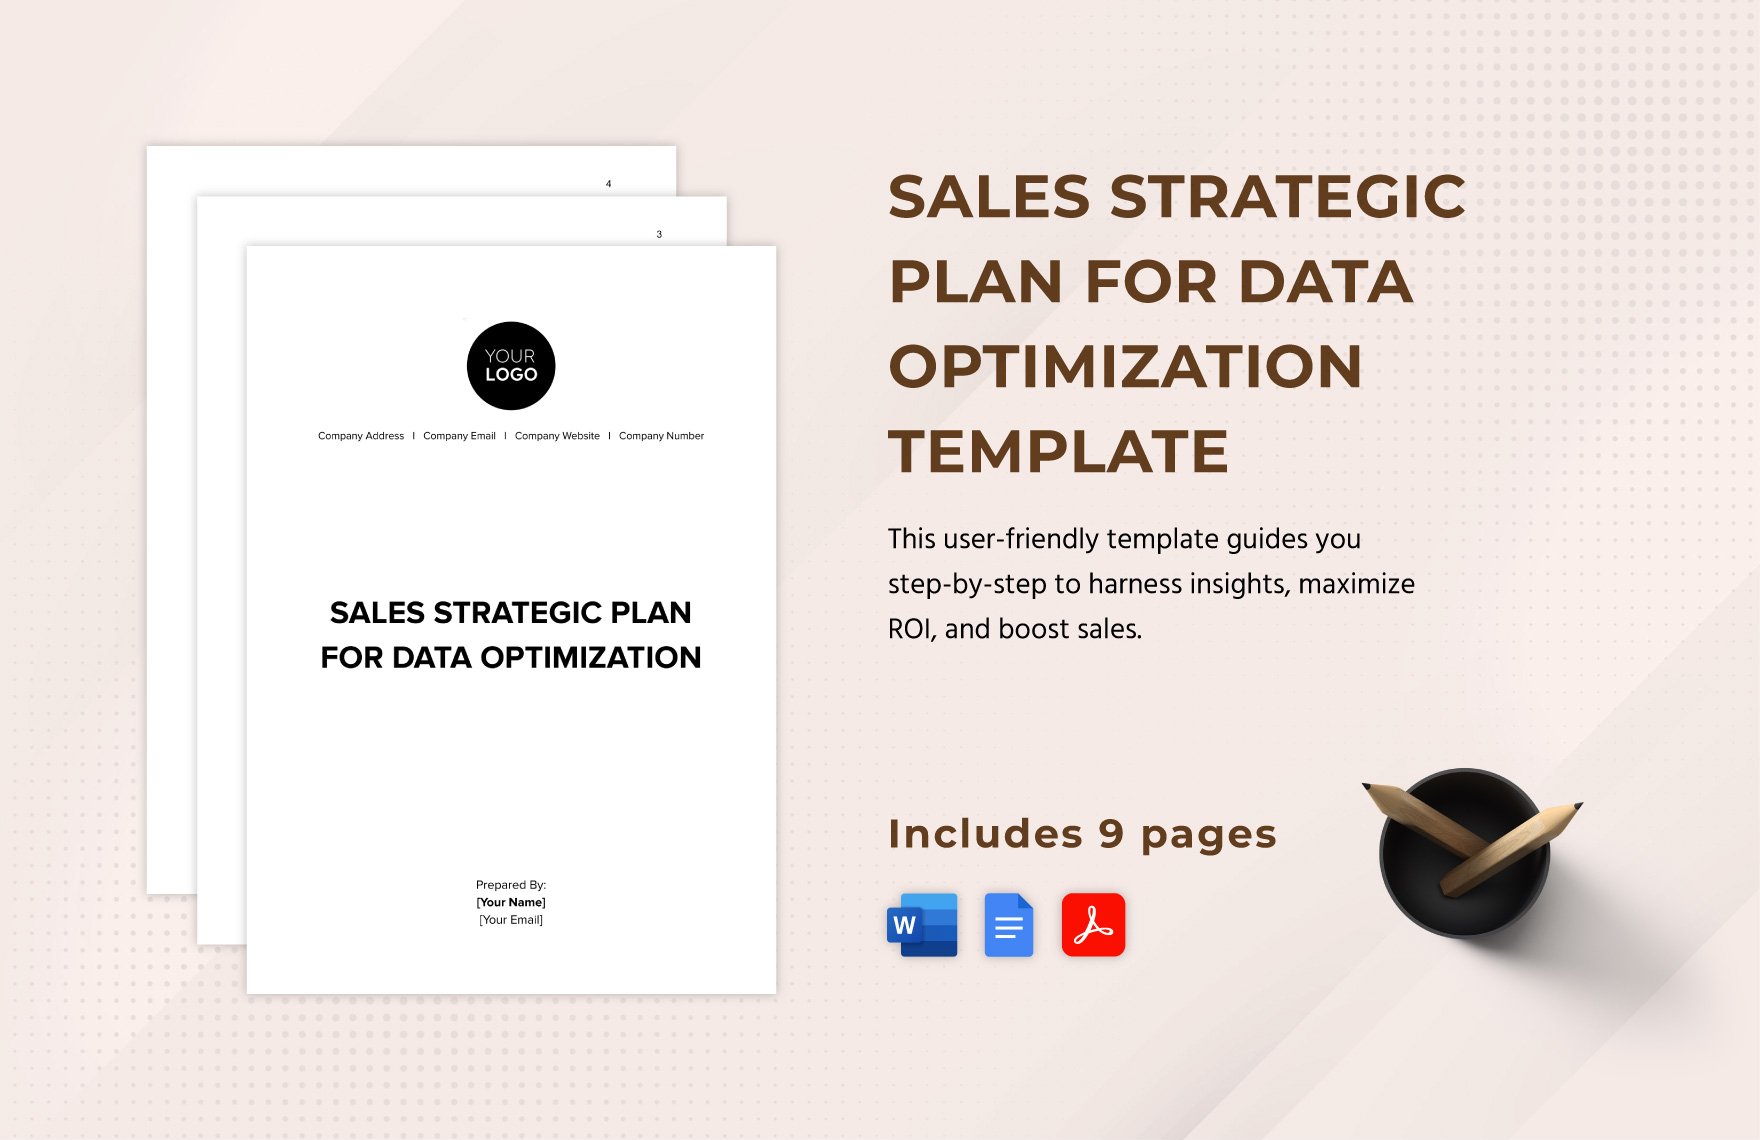 Sales Strategic Plan for Data Optimization Template